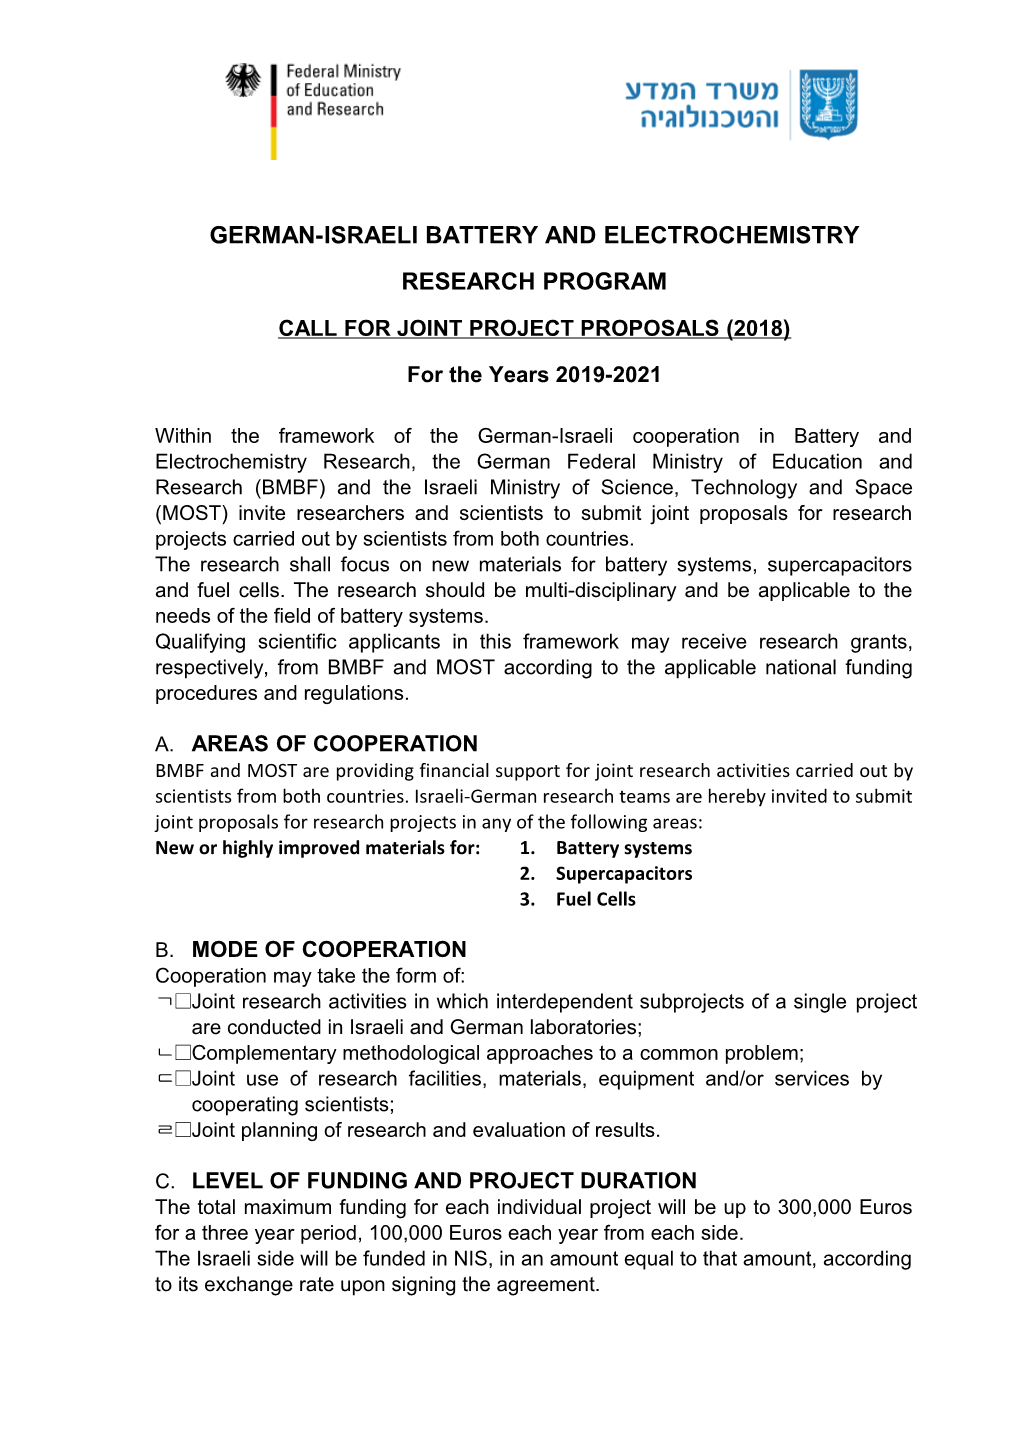 German-Israeli Battery Program - Call for Proposals